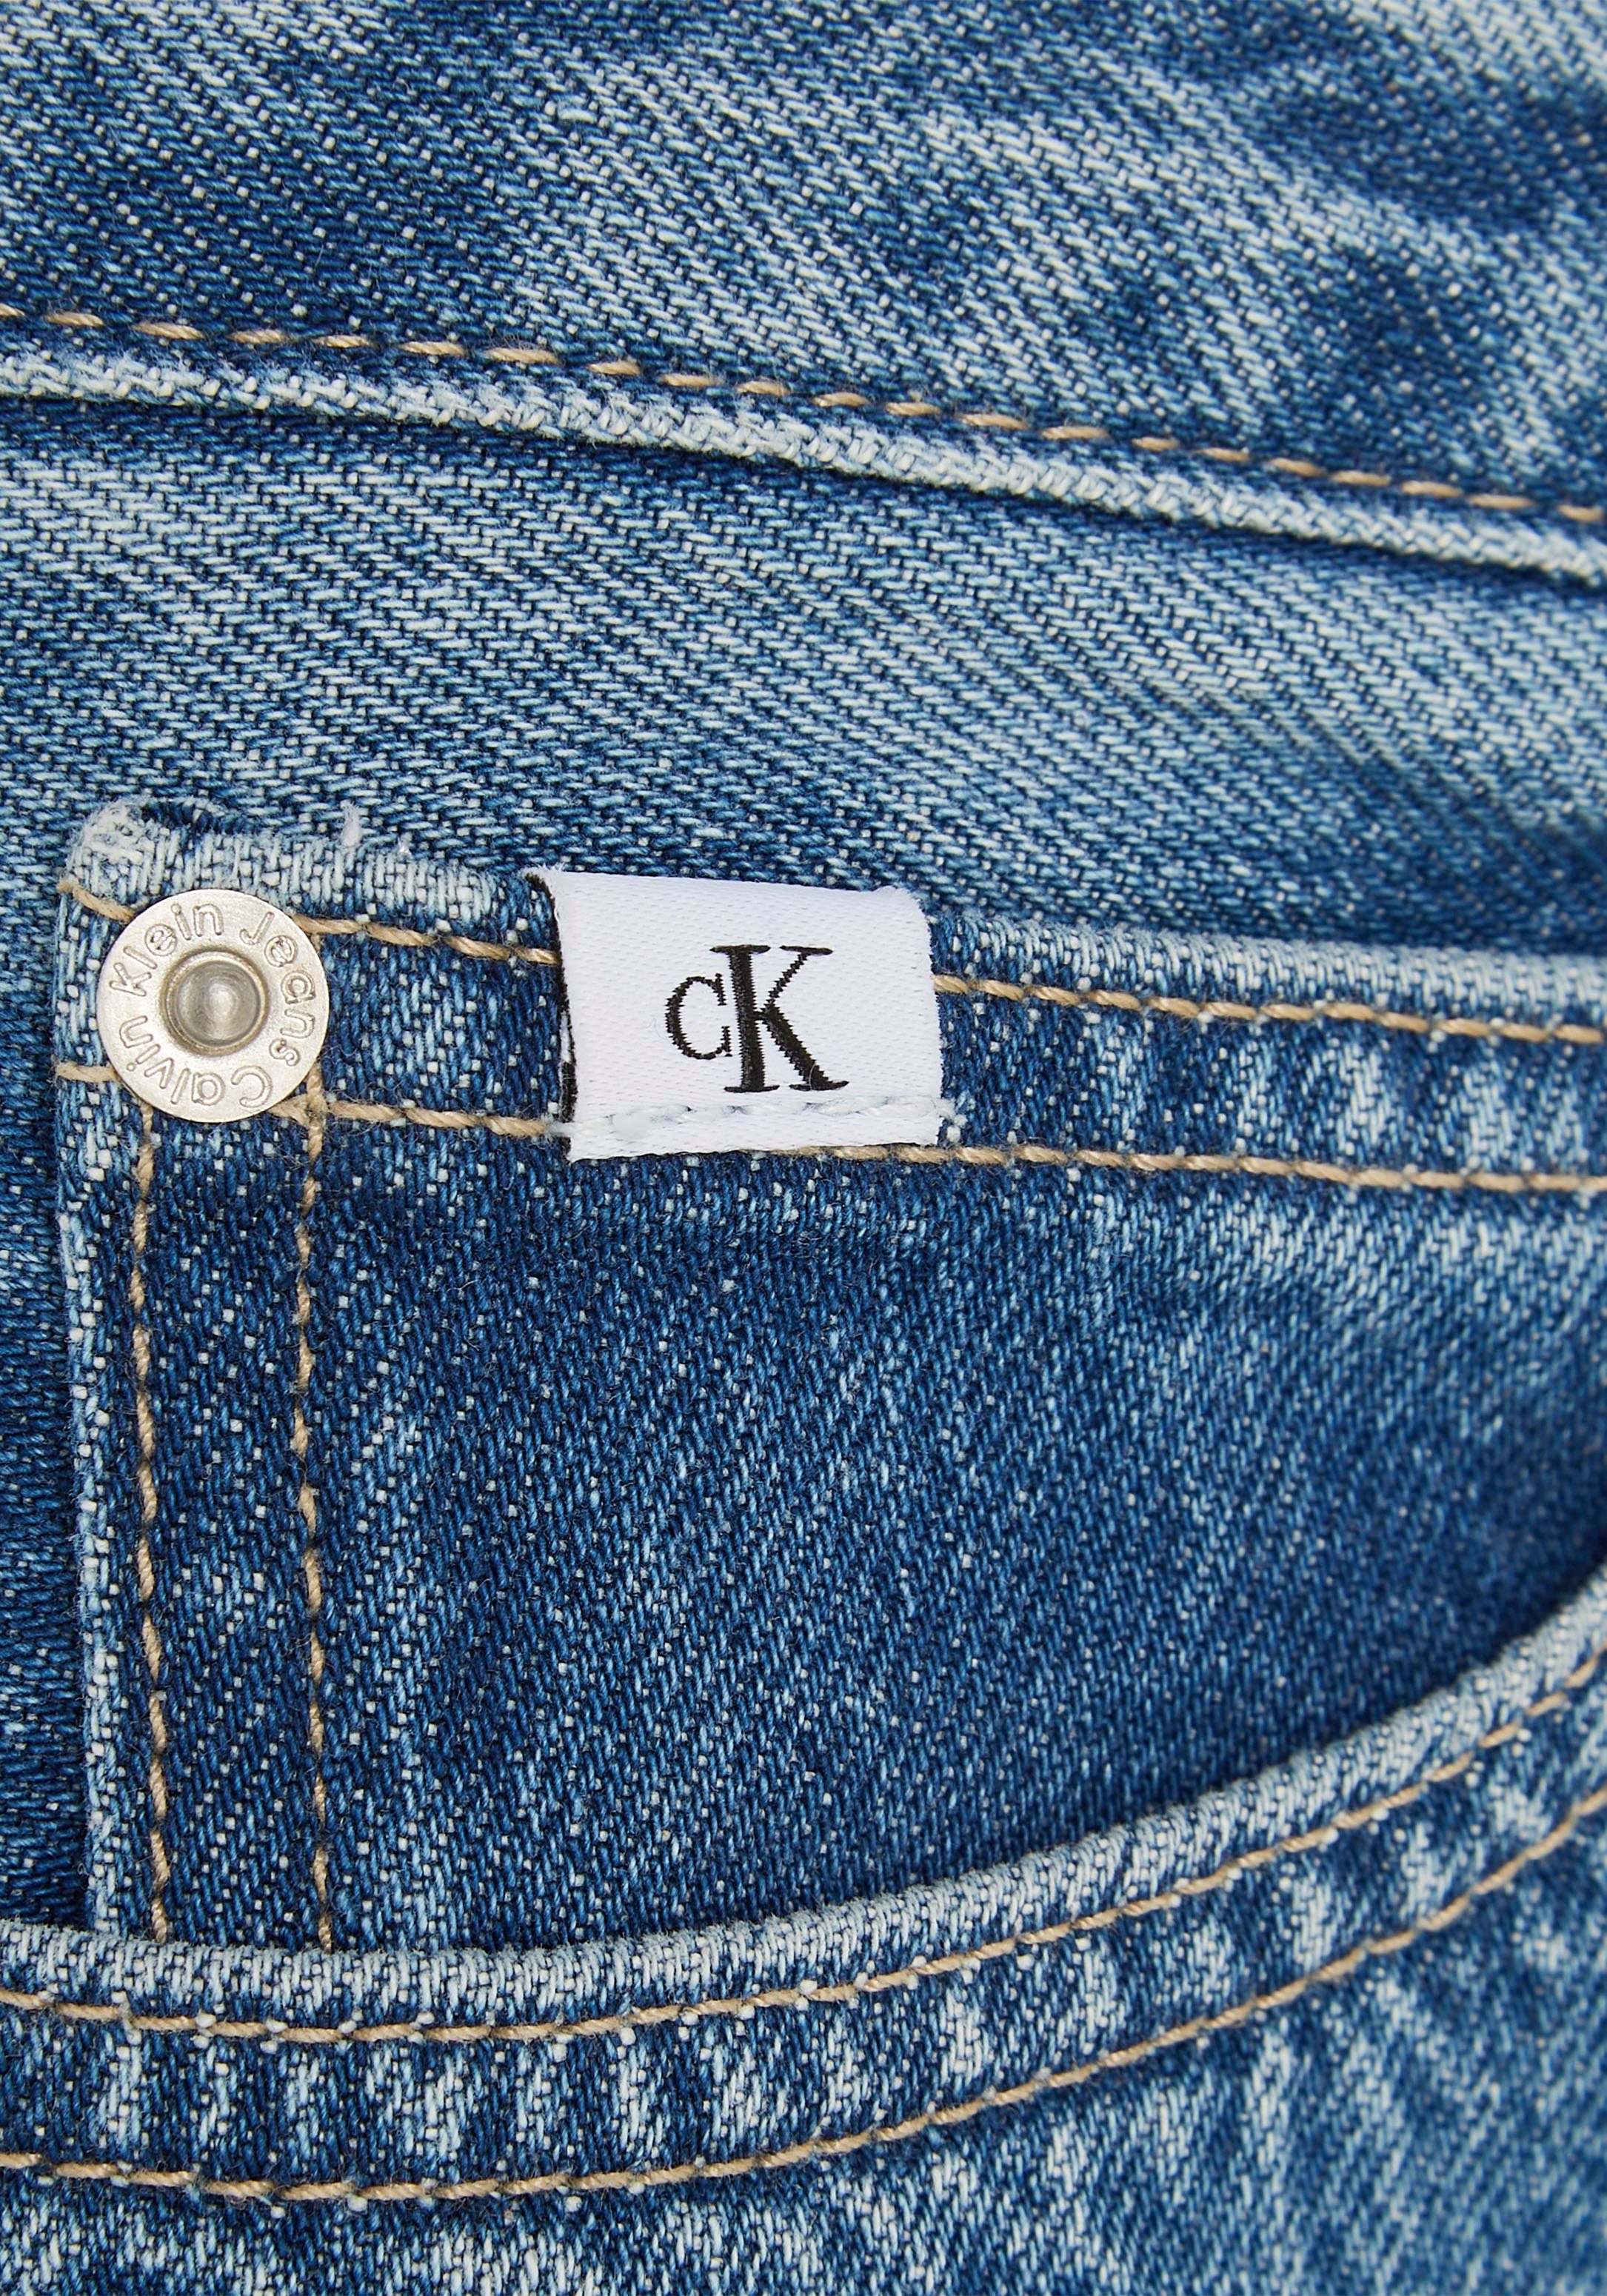 SKIRT Jeansrock Calvin A-LINE Klein MINI Jeans